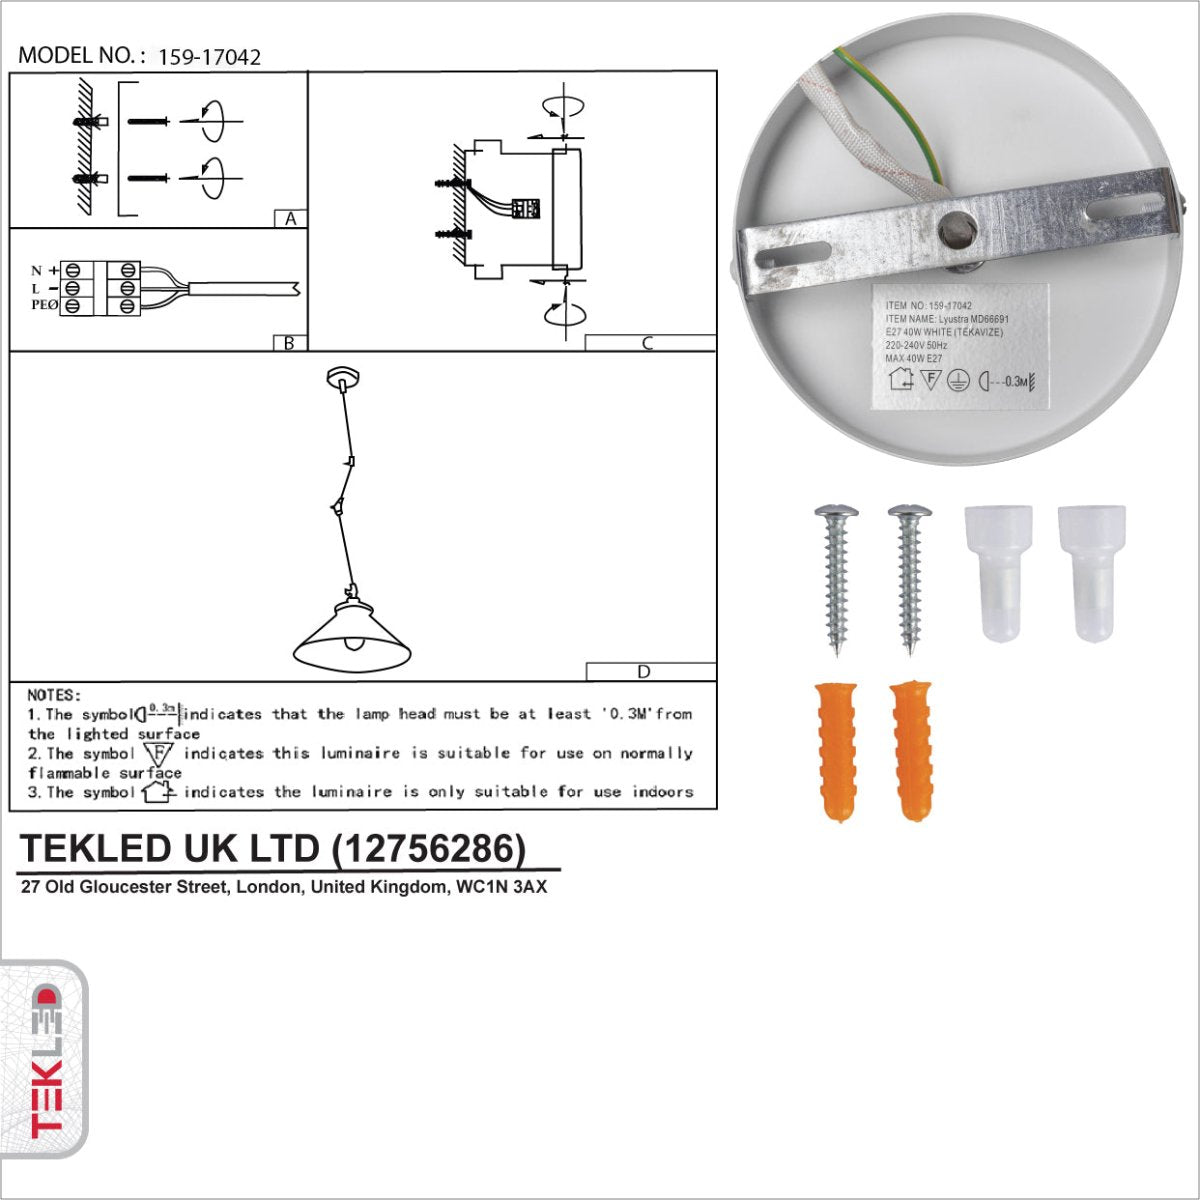 User manual for White Metal Hinged Funnel Ceiling Light with E27 Fitting | TEKLED 159-17042